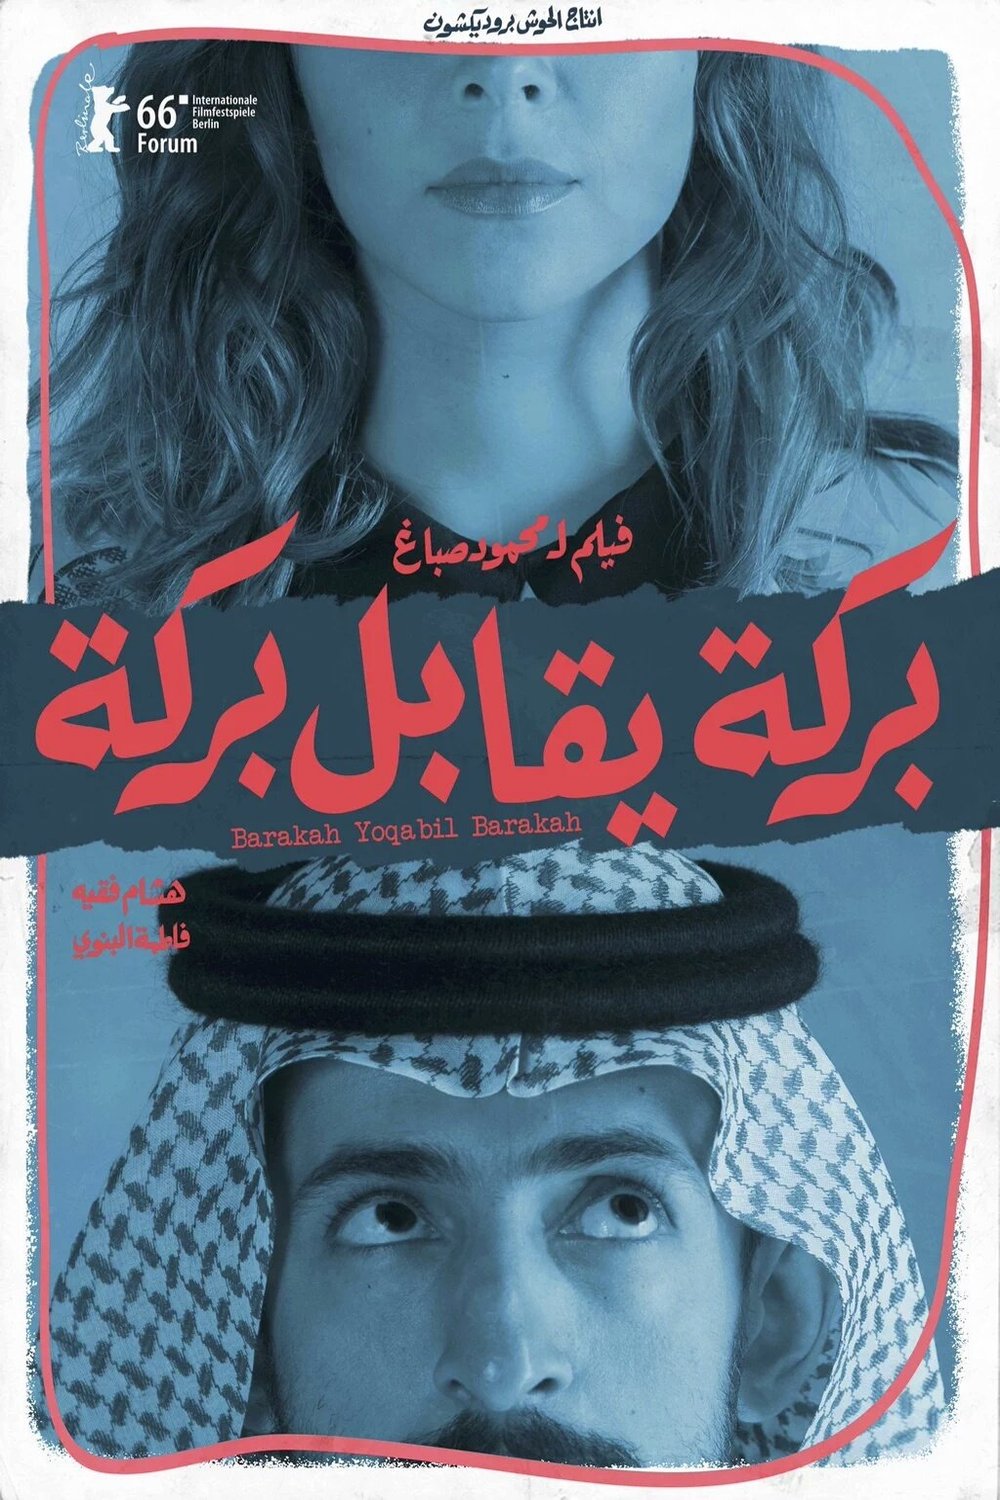 Poster of the movie Barakah Meets Barakah